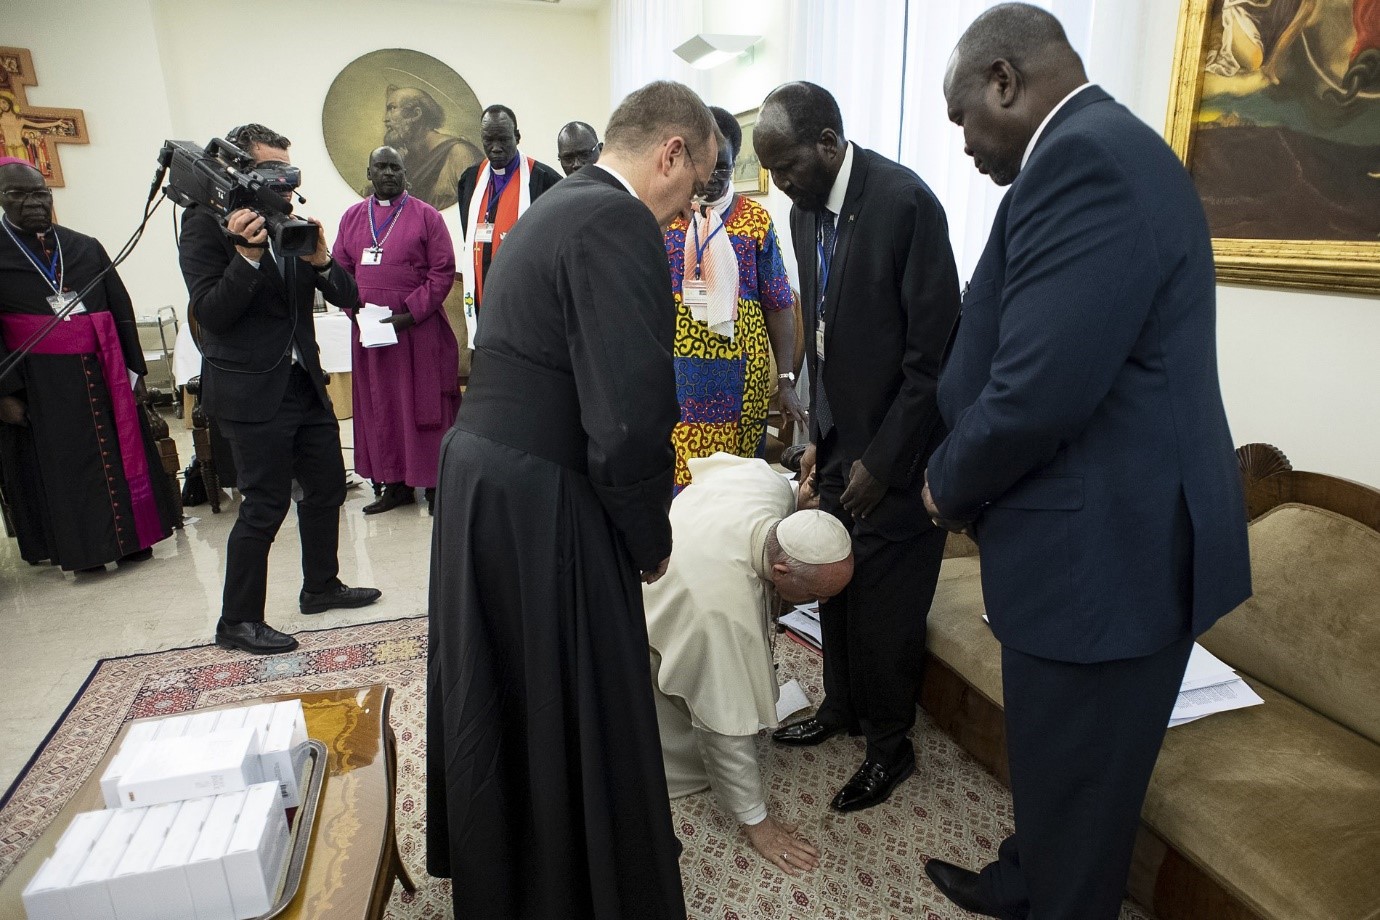 Pope Francis’ “kiss for peace” keep hopes alive, says Yakani